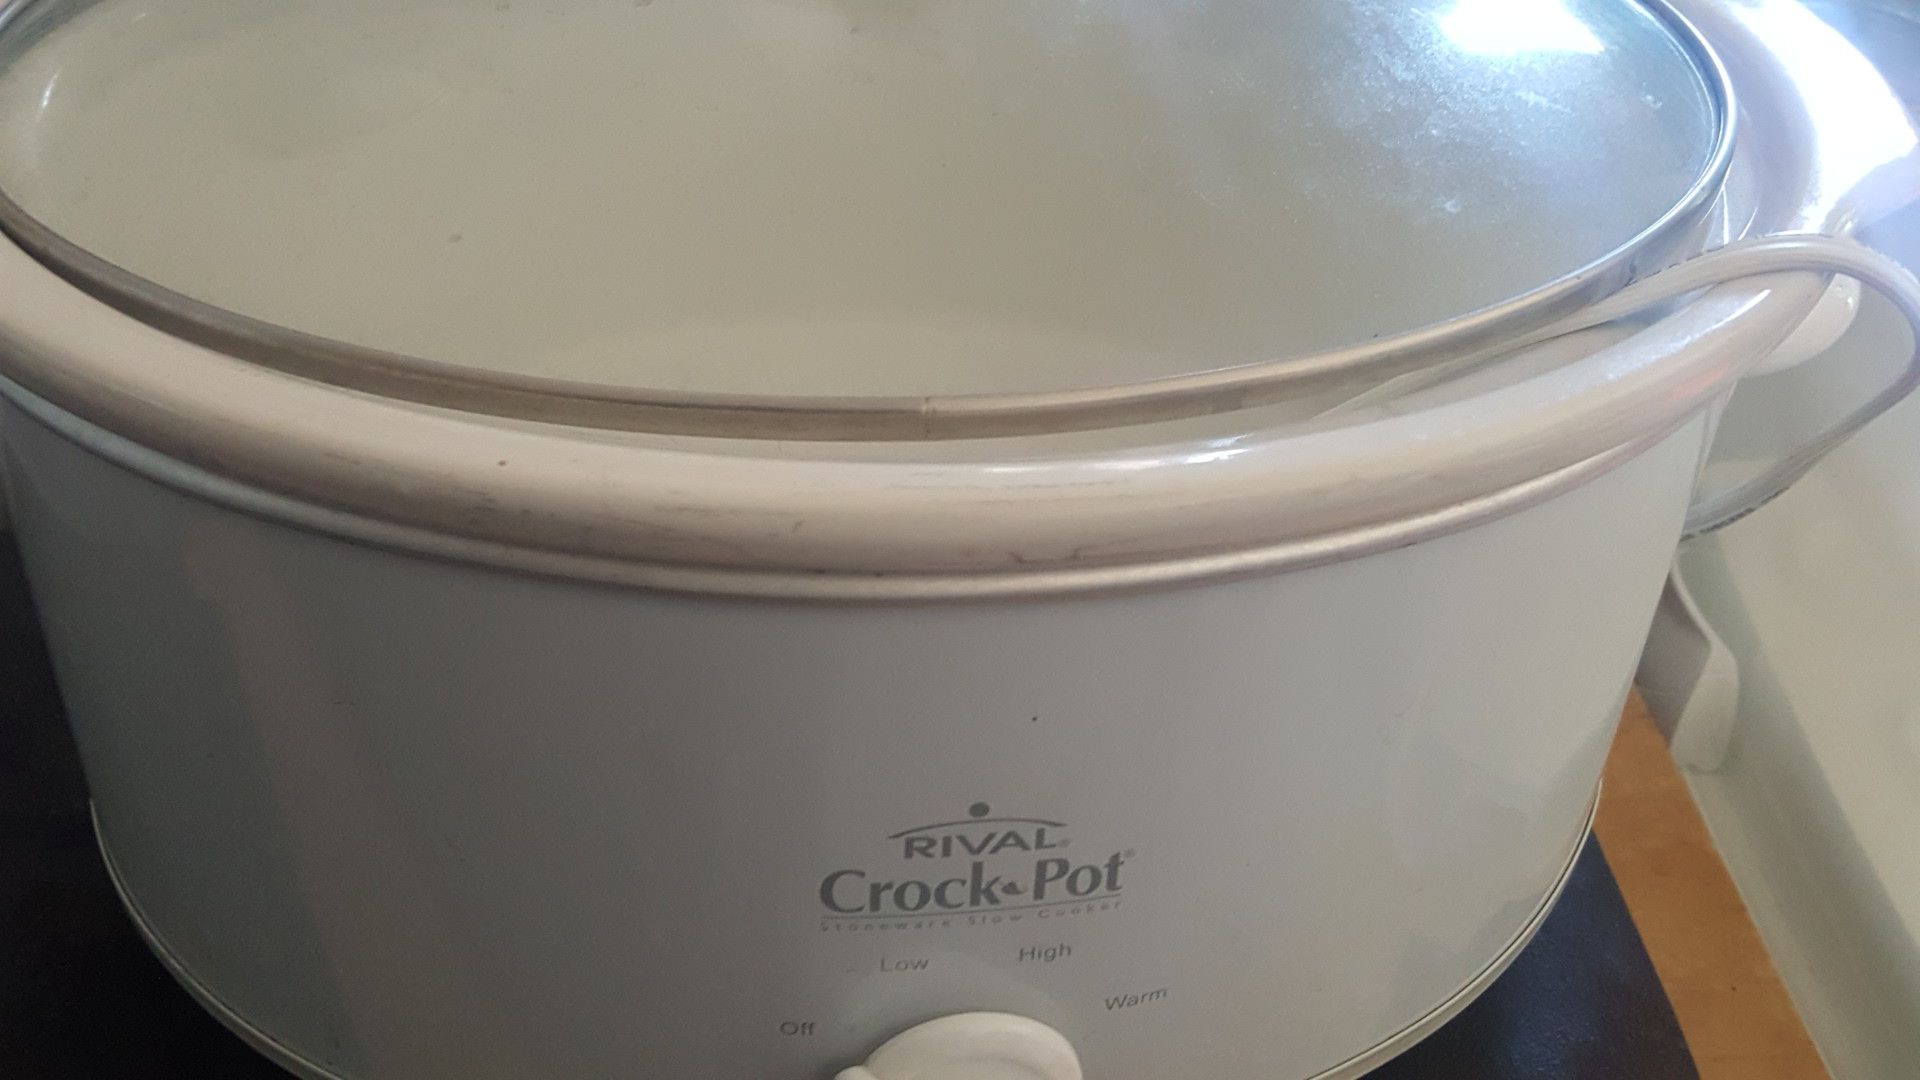 Giant crock Pot